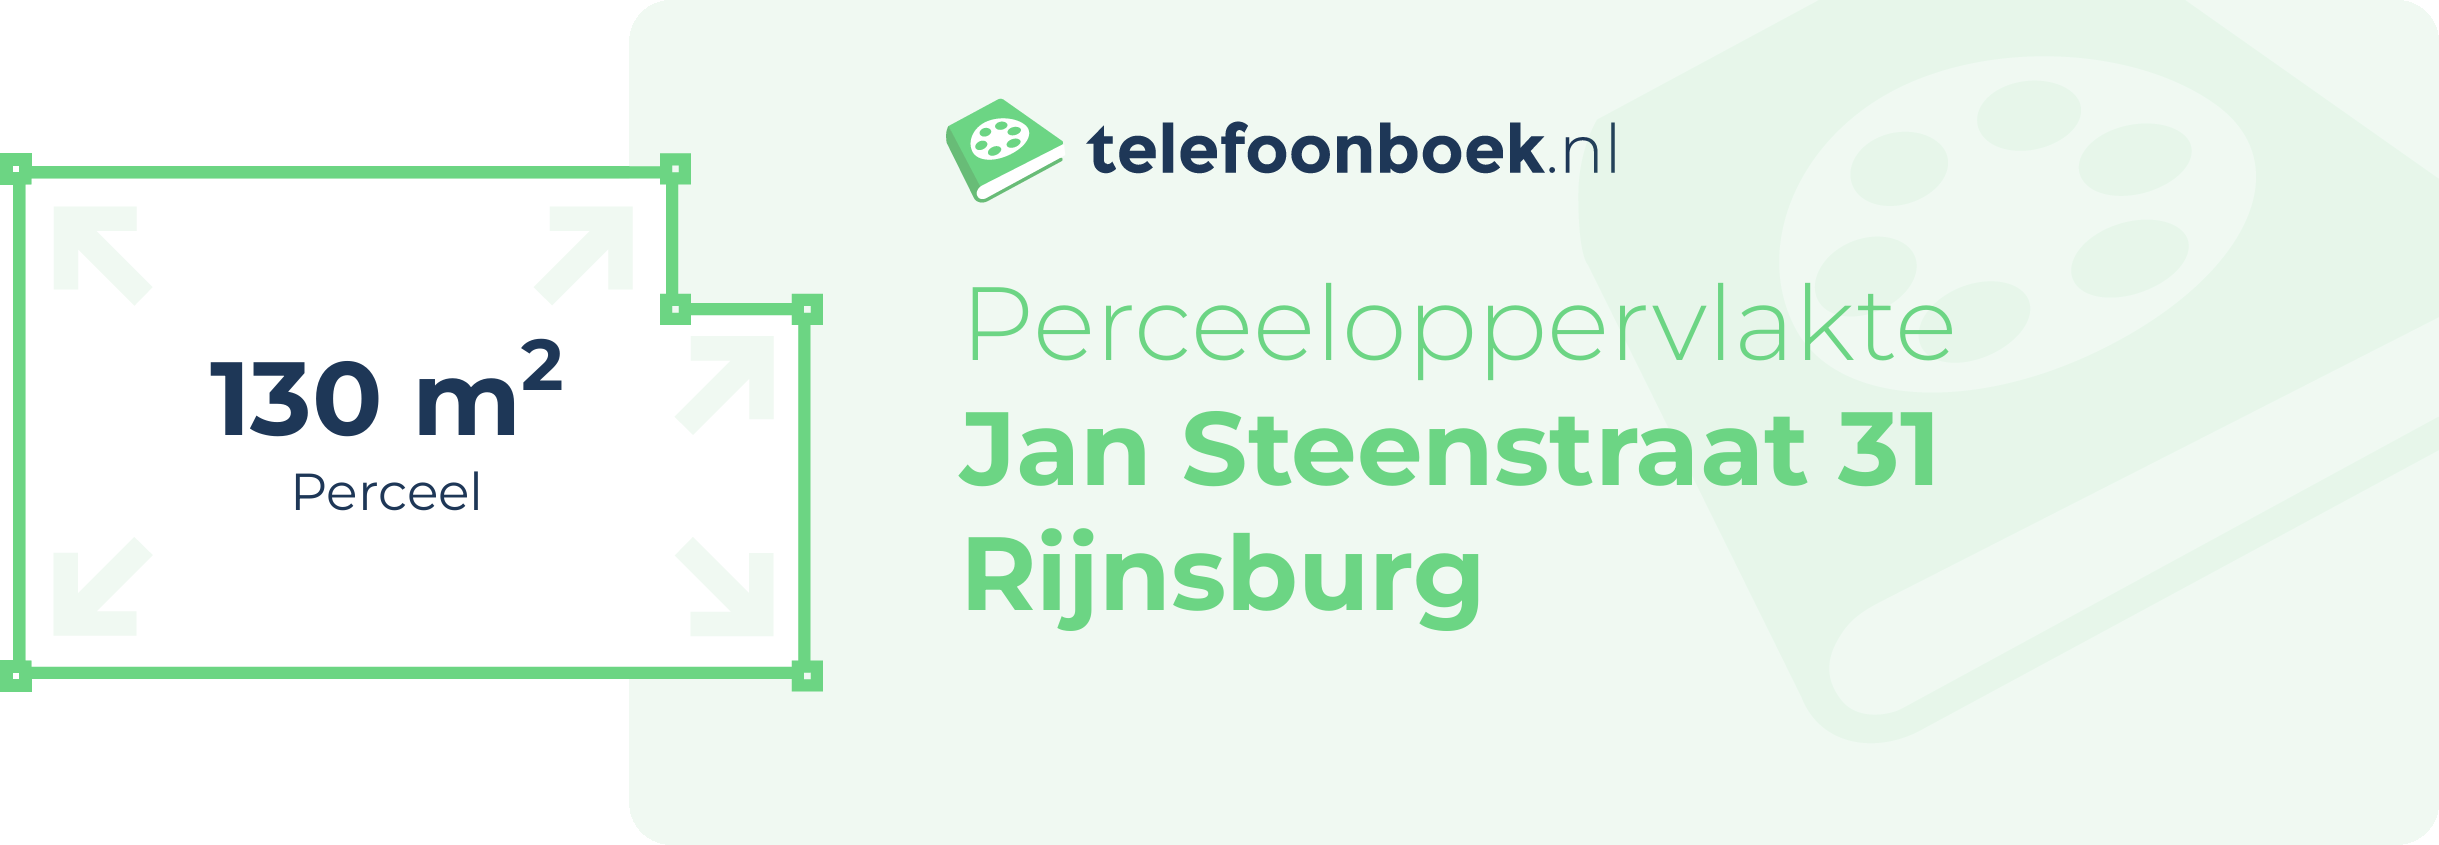 Perceeloppervlakte Jan Steenstraat 31 Rijnsburg